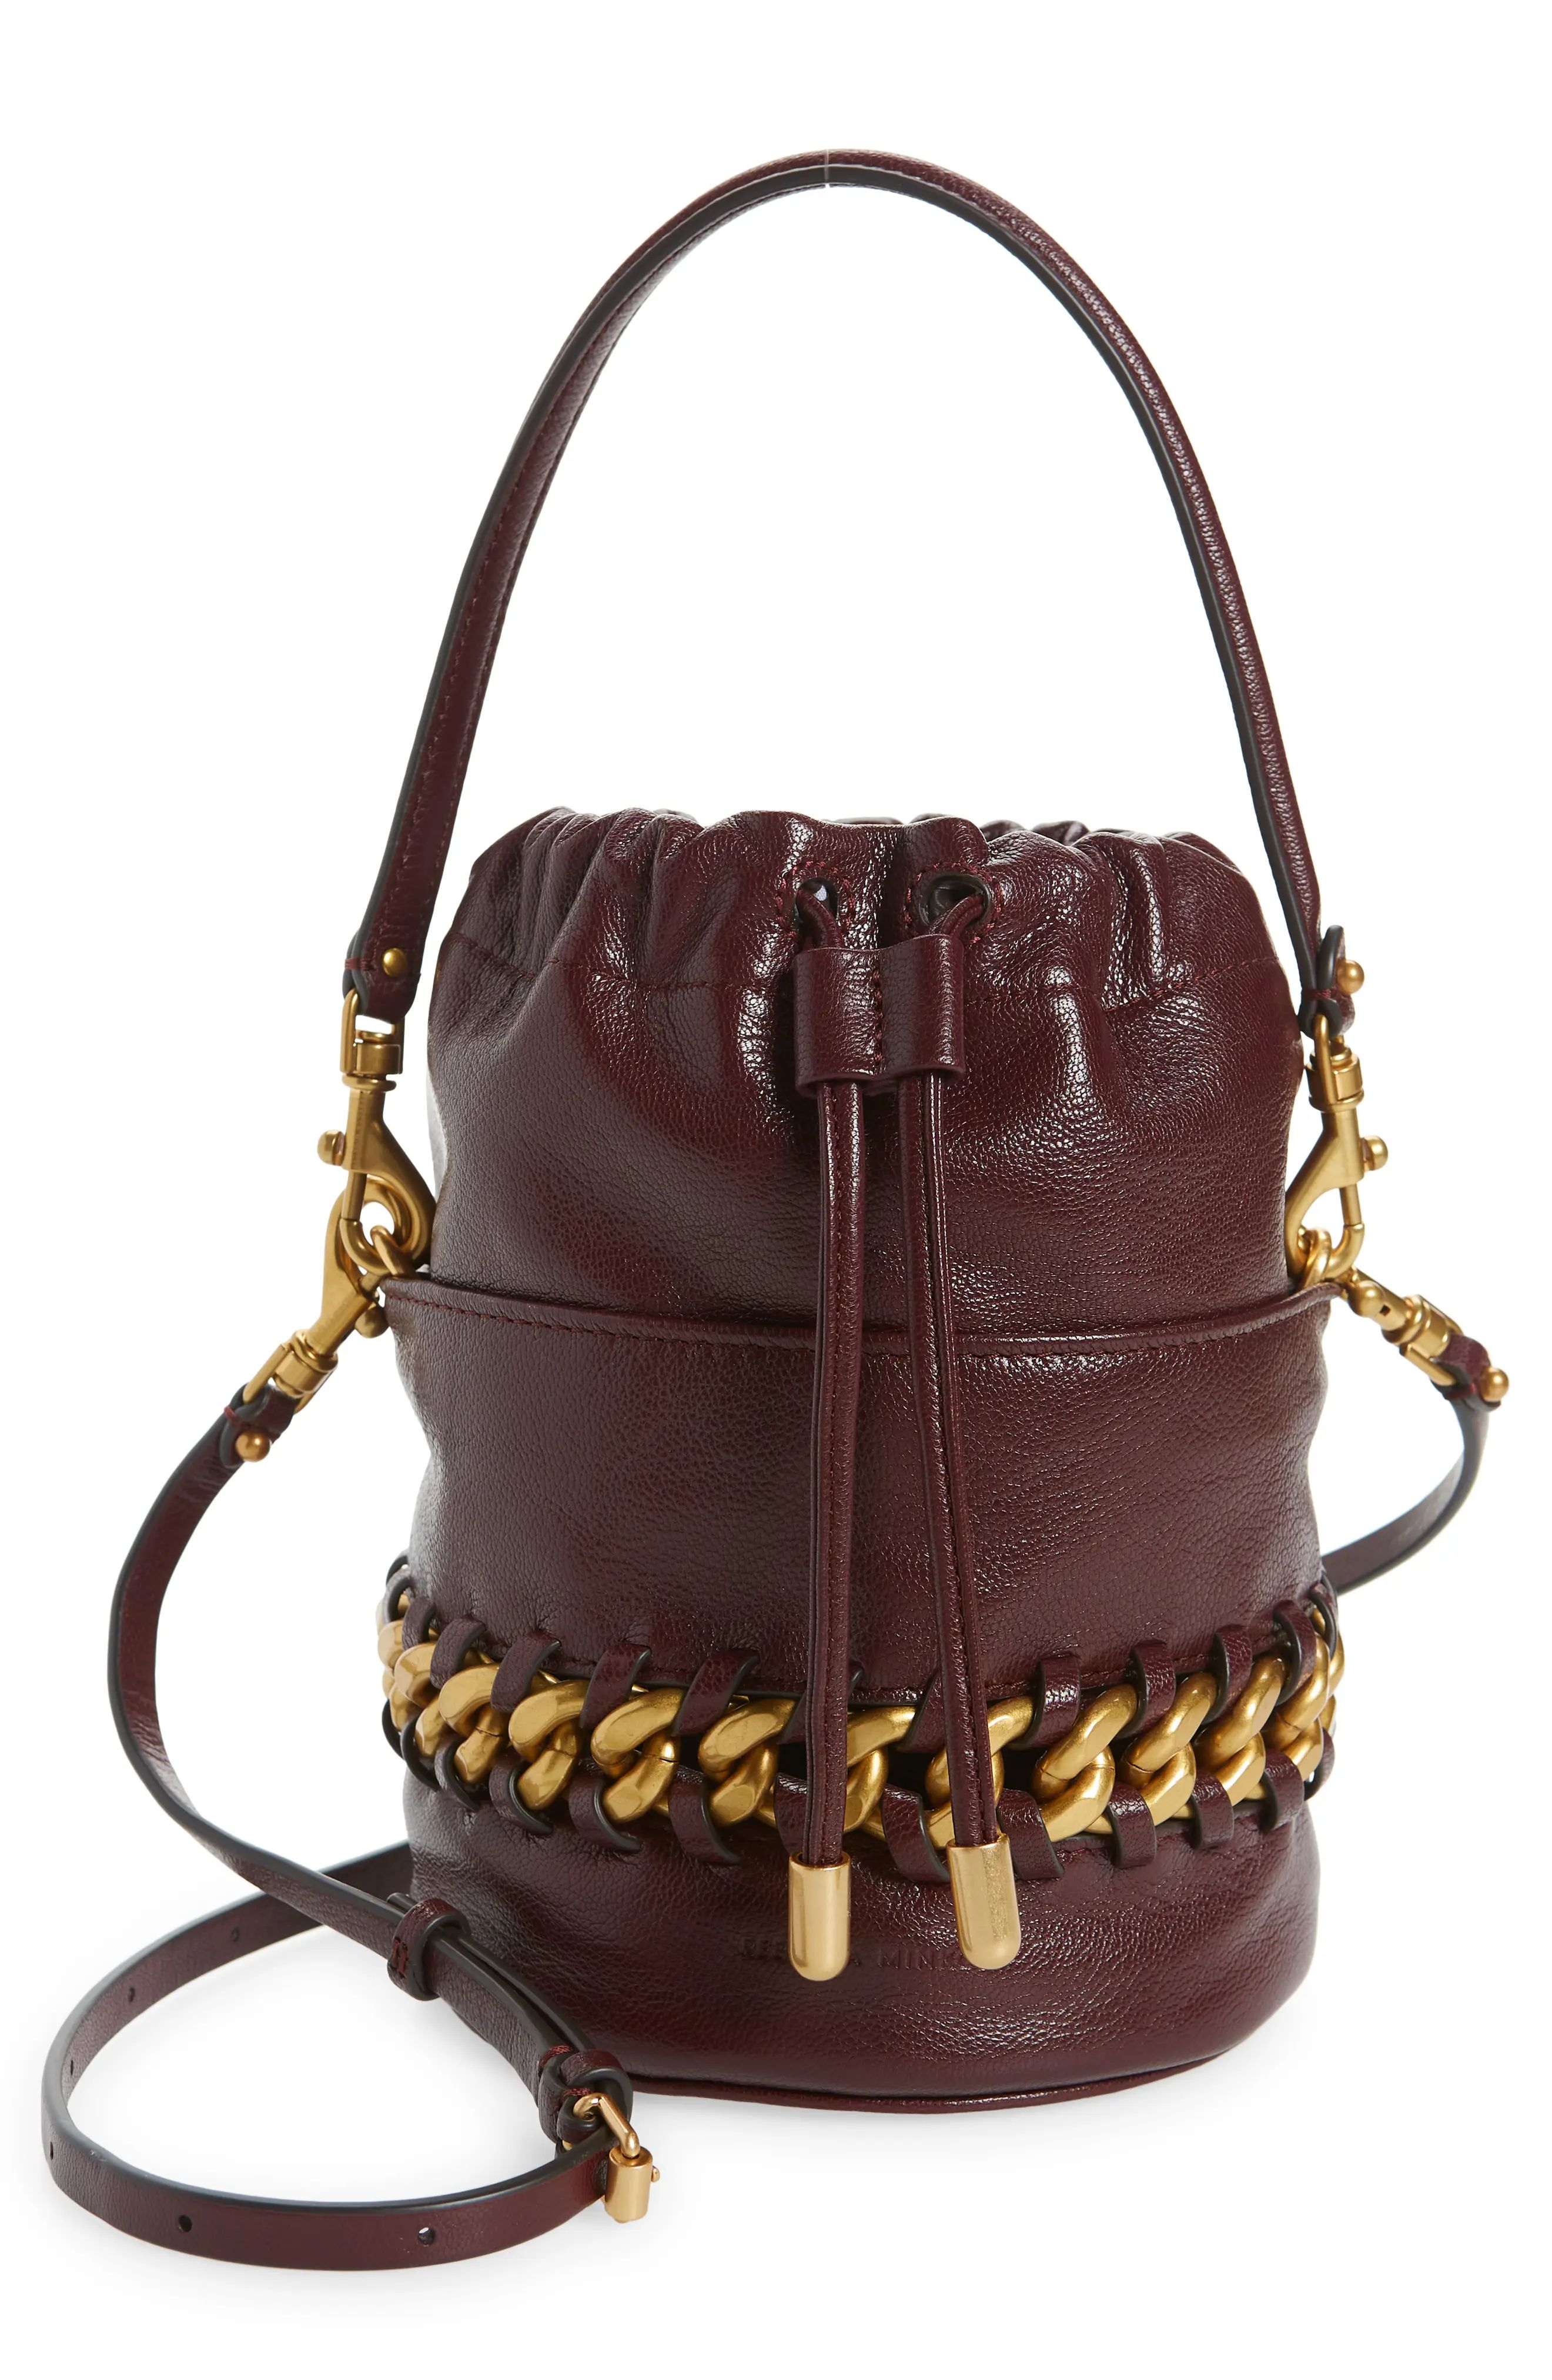 Rebecca Minkoff Chain Bucket Leather Handbag in Malbec at Nordstrom | Nordstrom